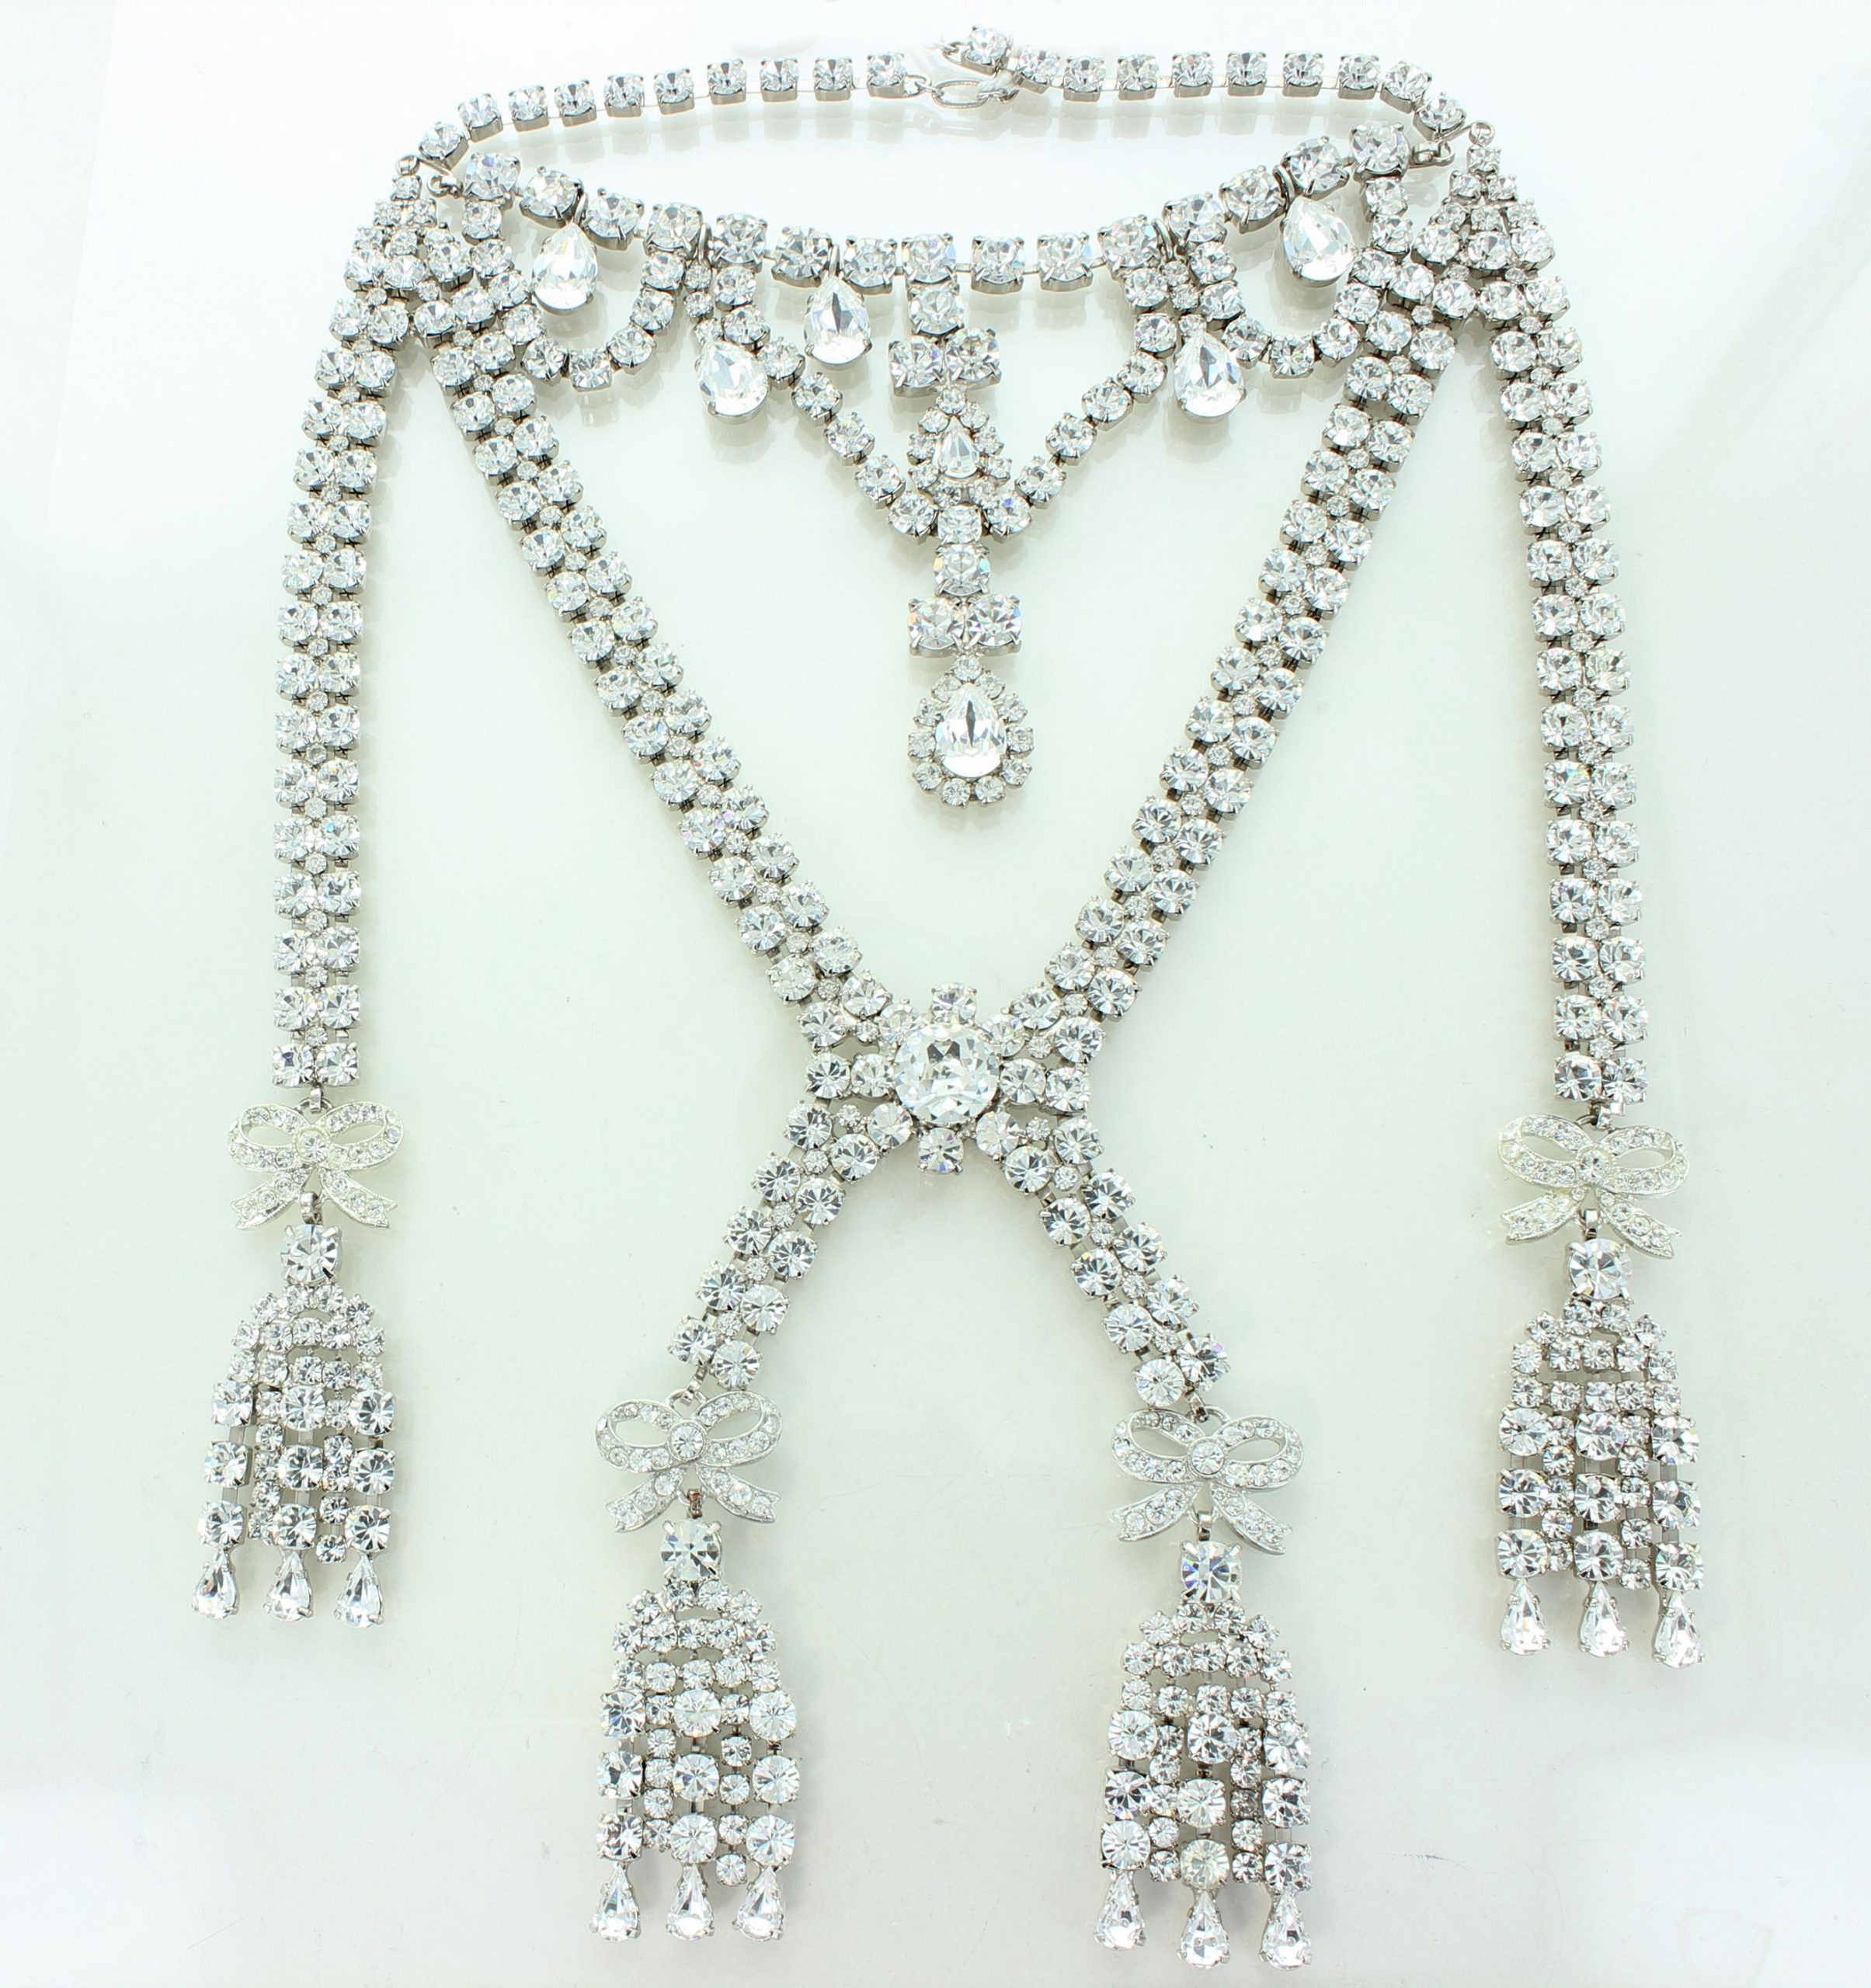 Affair of the Diamond Necklace - Wikipedia